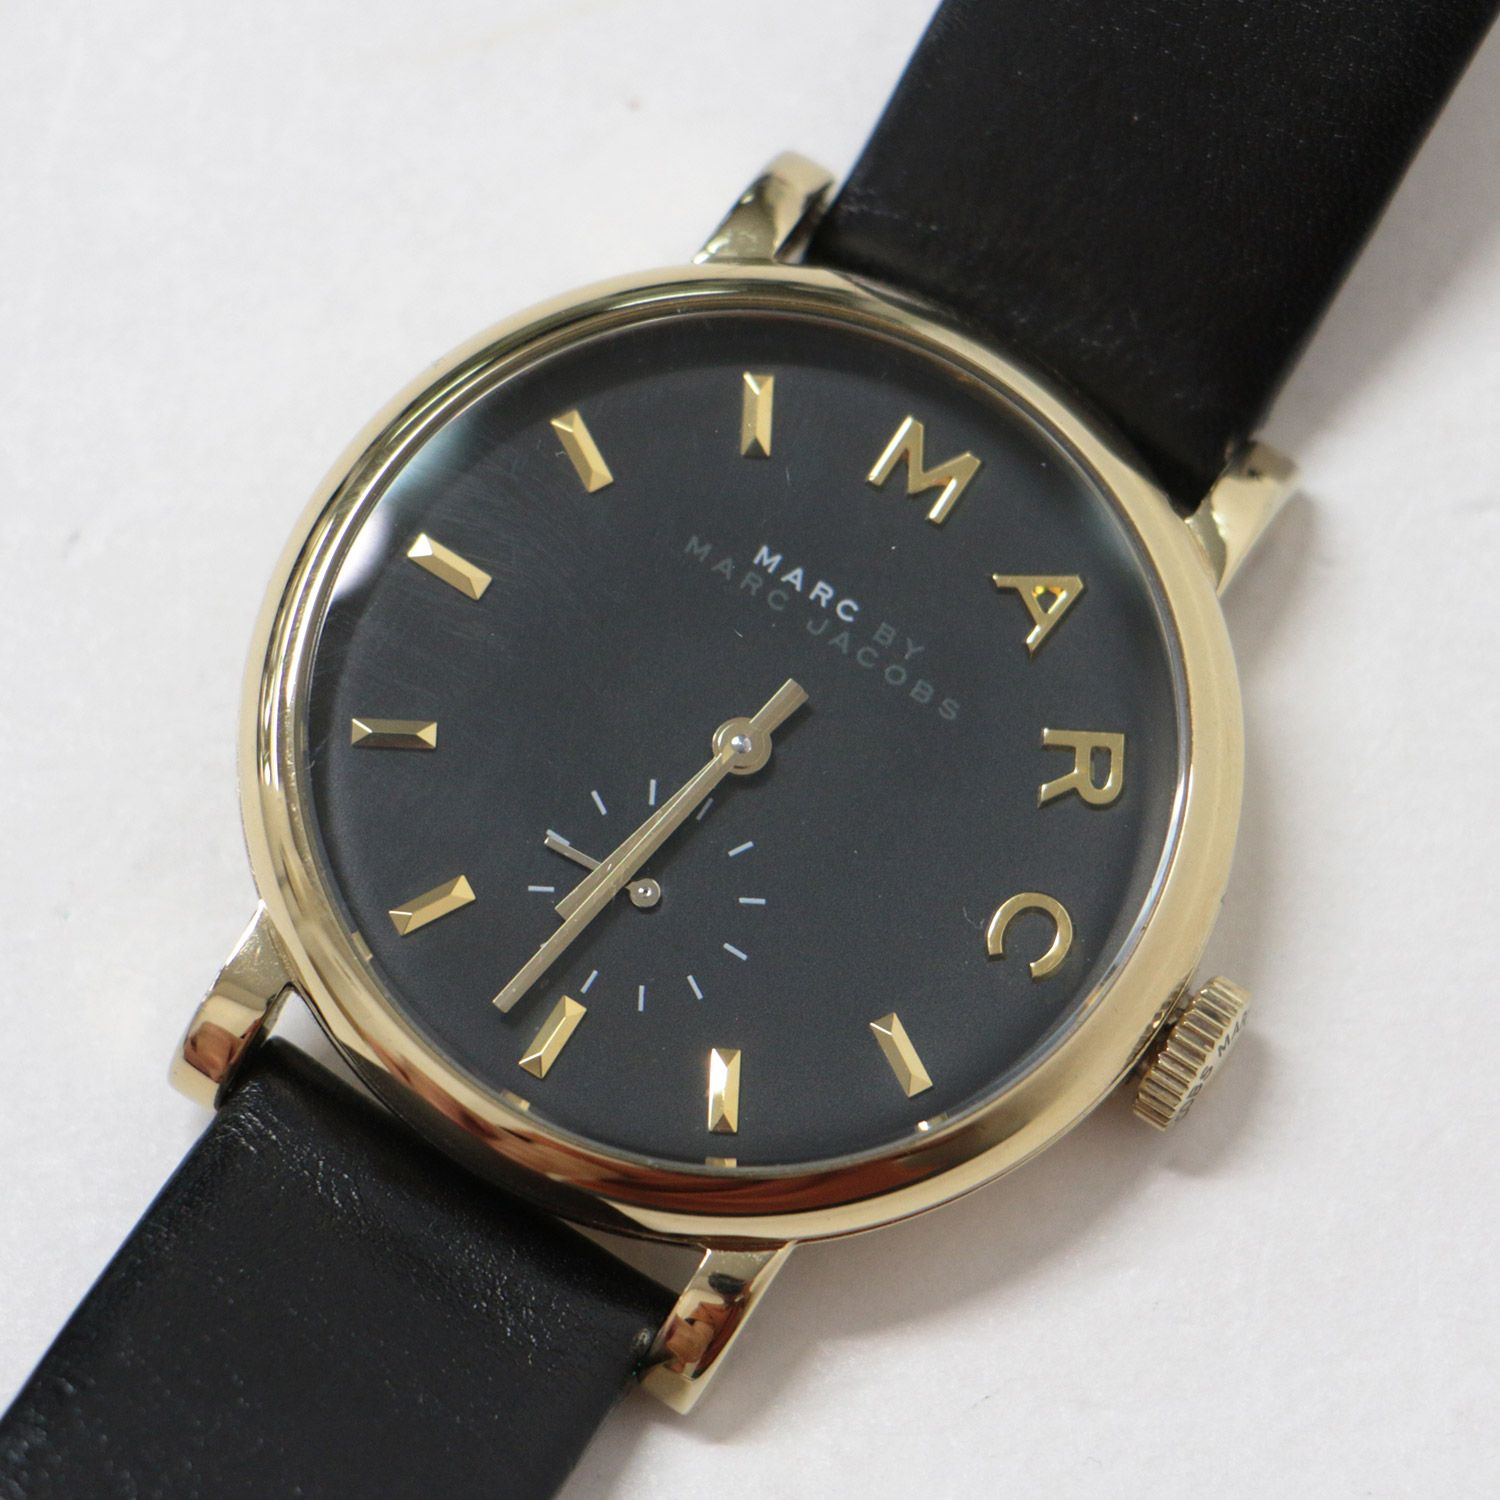 MARC BY MARC JACOBS マークバイマークジェイコブス 時計 腕時計 ブラック 黒 クオーツ ロゴ MBM1269 アナログ きれいめ  上品 フォーマル シンプル ブランド